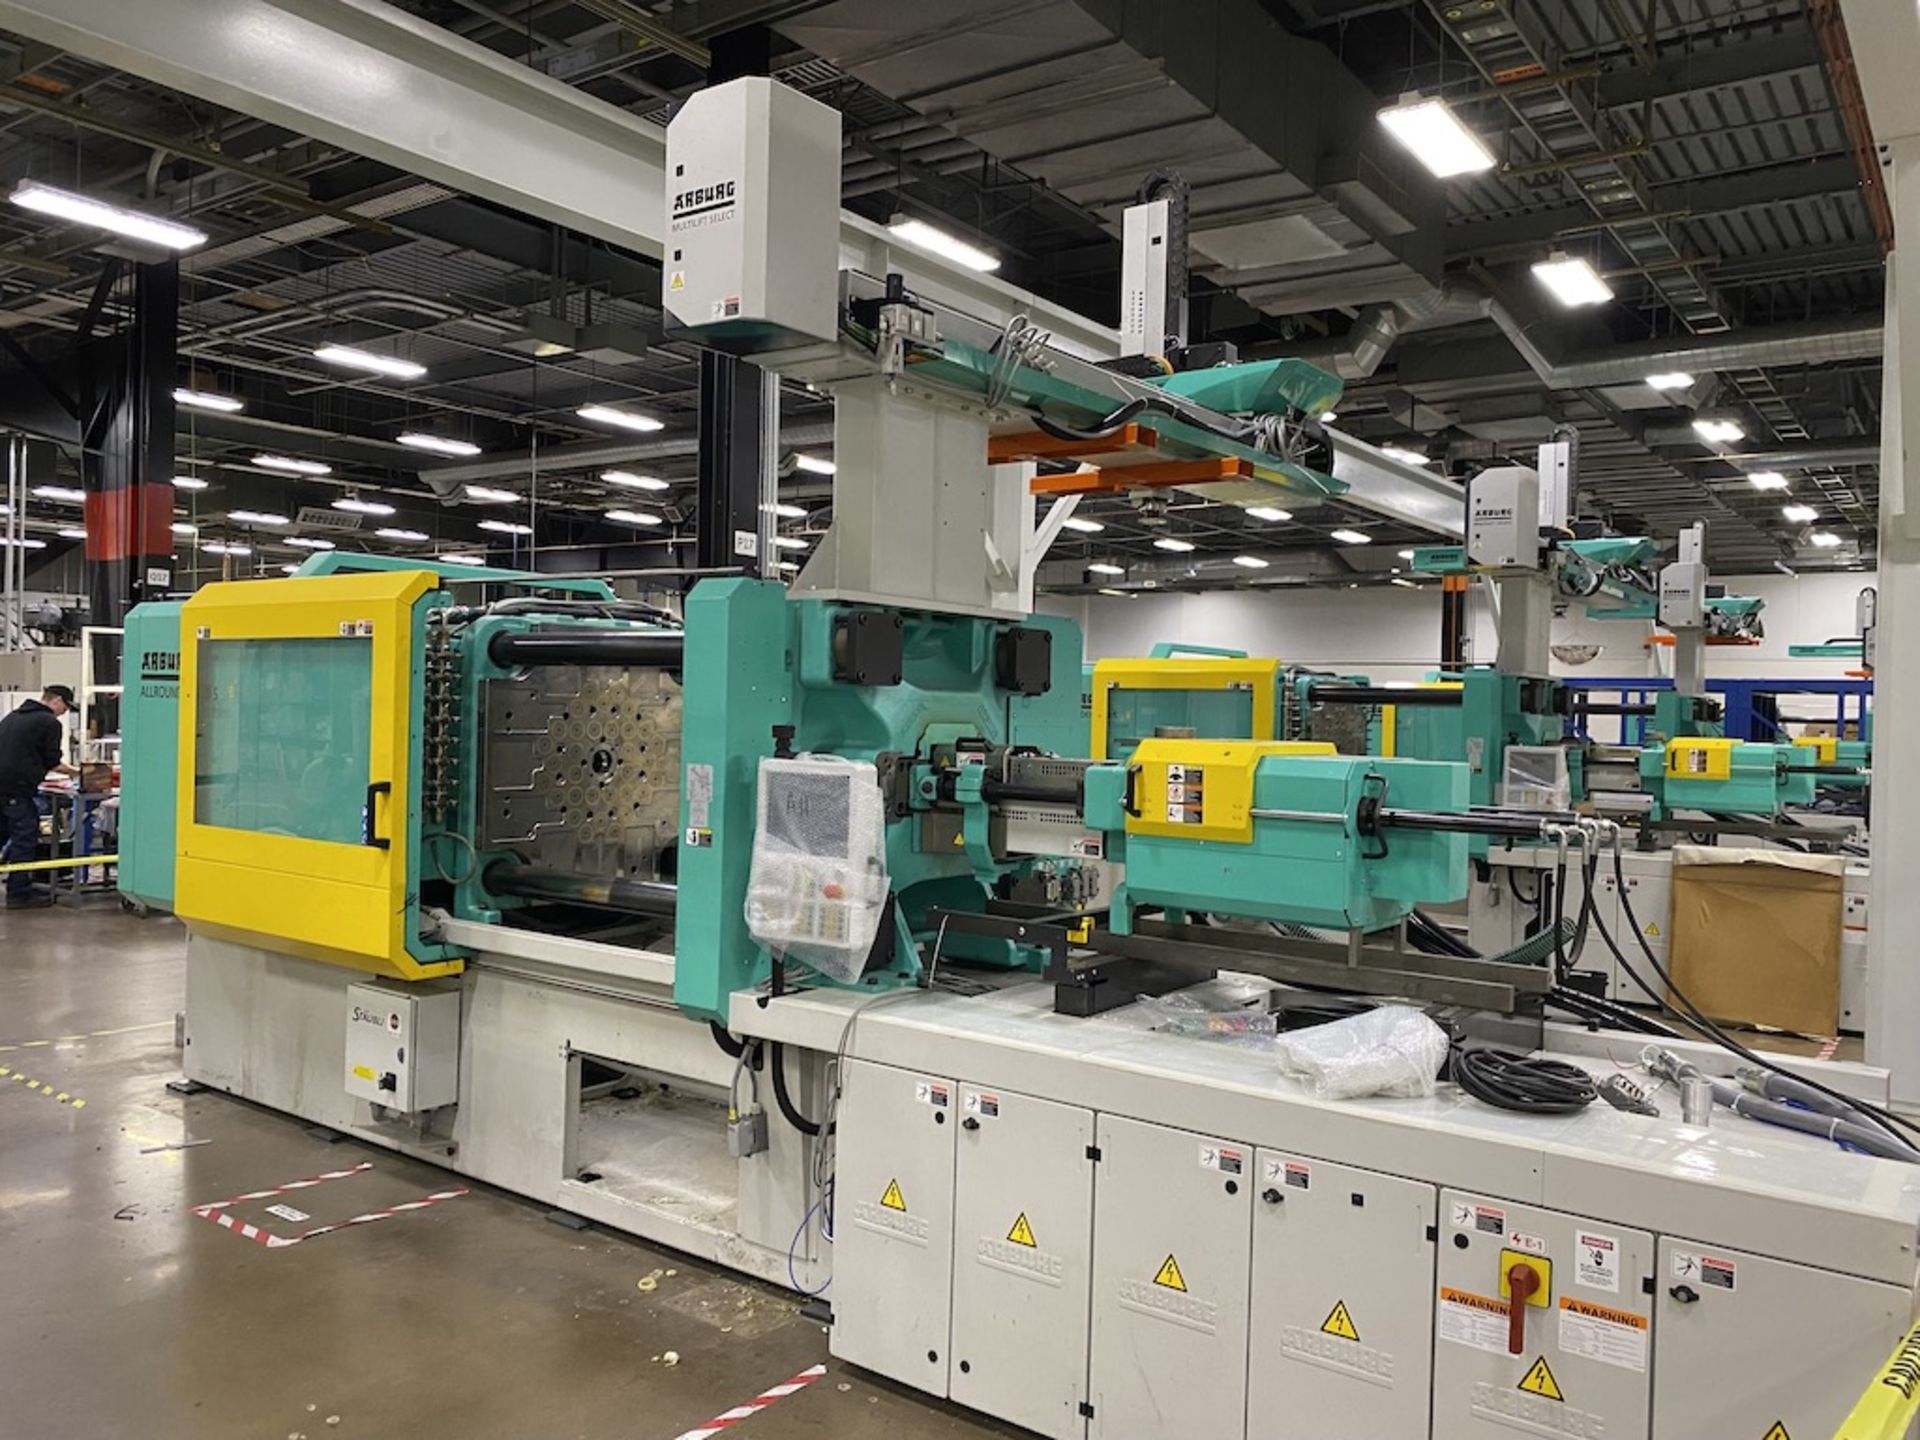 Arburg 320 Metric Ton Injection Molding Press w/Arburg Robot, New in 2015 - Bild 3 aus 10